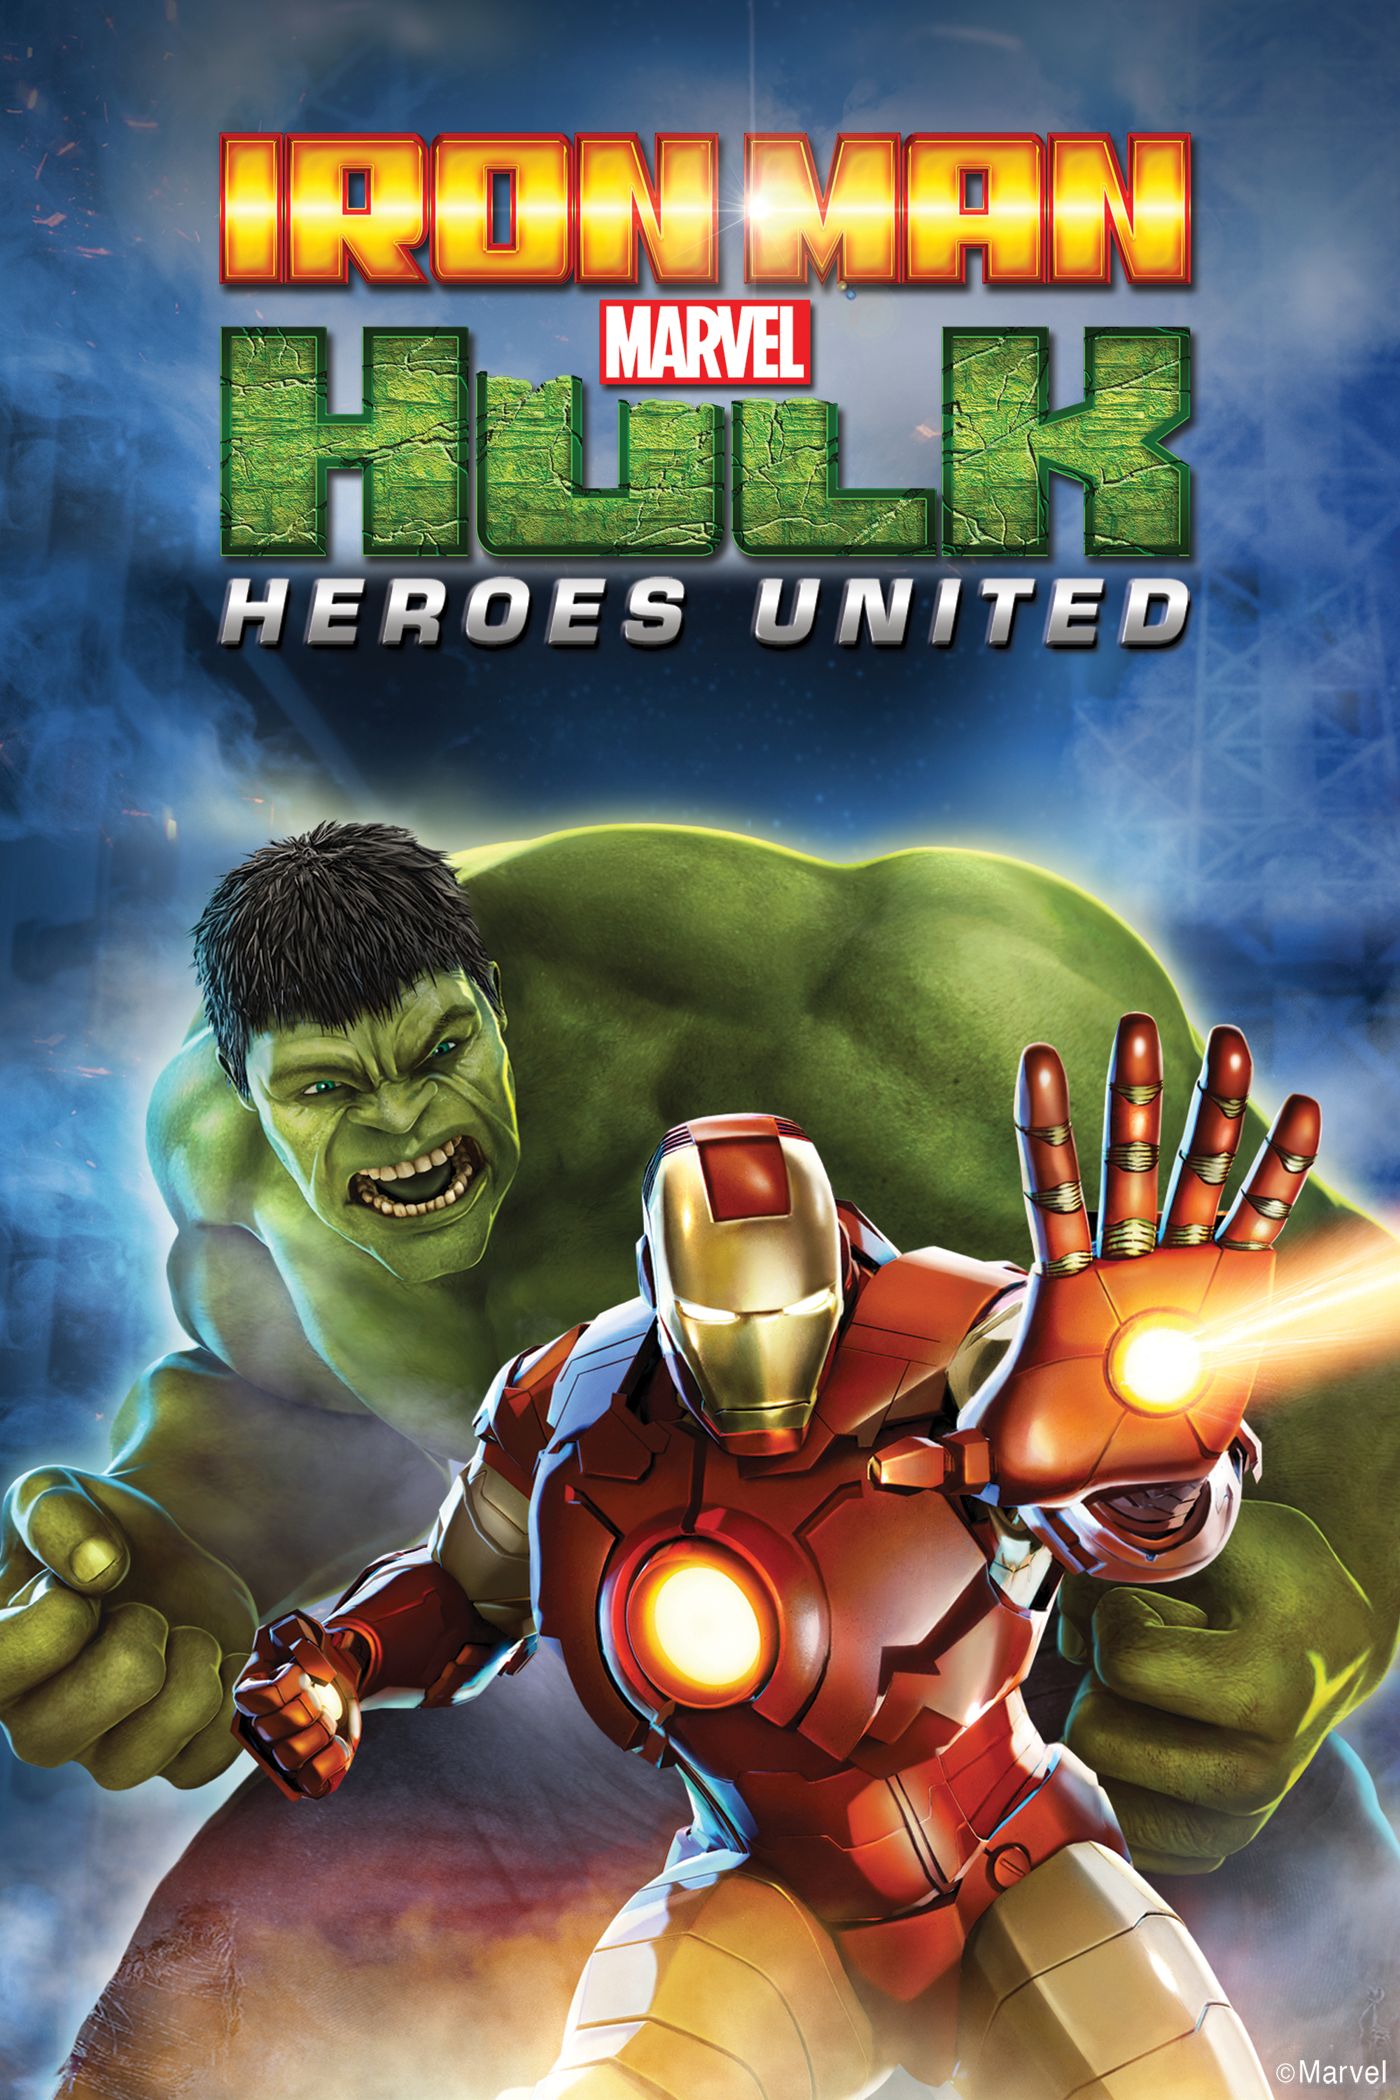 Marvel's Iron Man & Hulk Heroes United   Full Movie   Movies Anywhere